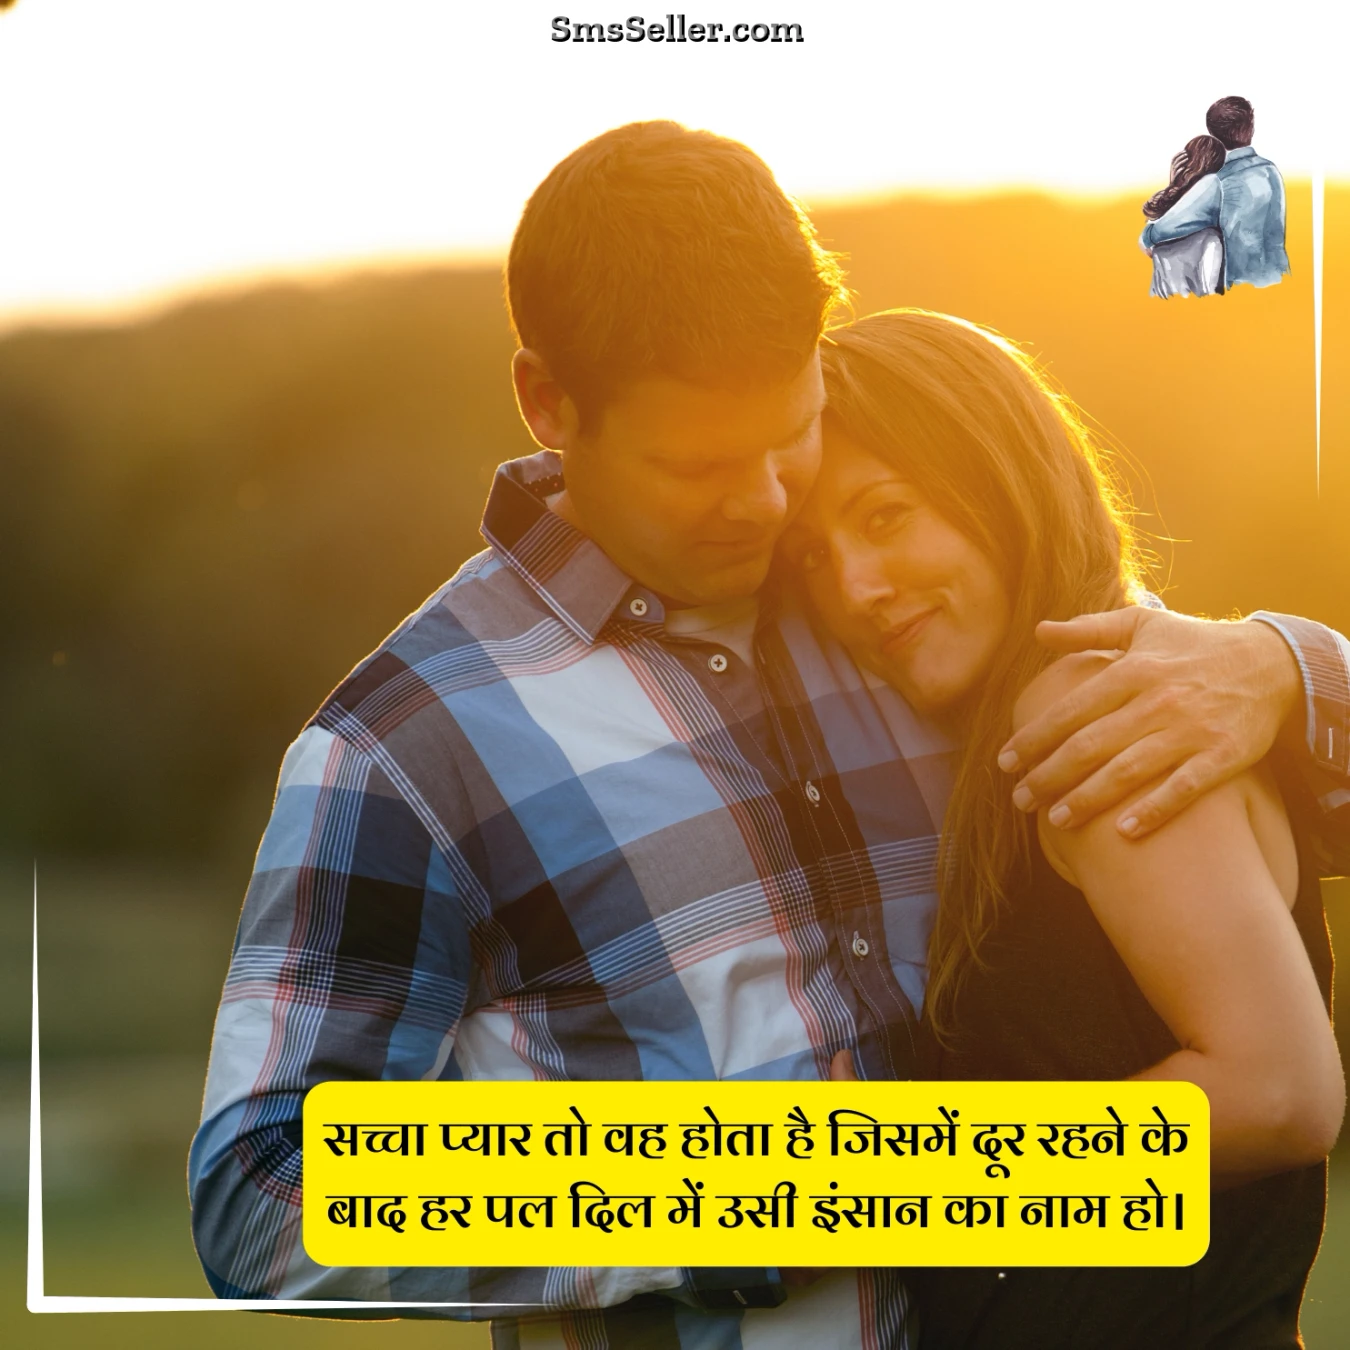 deep love quotes in hindi sachcha pyar woh hota hai